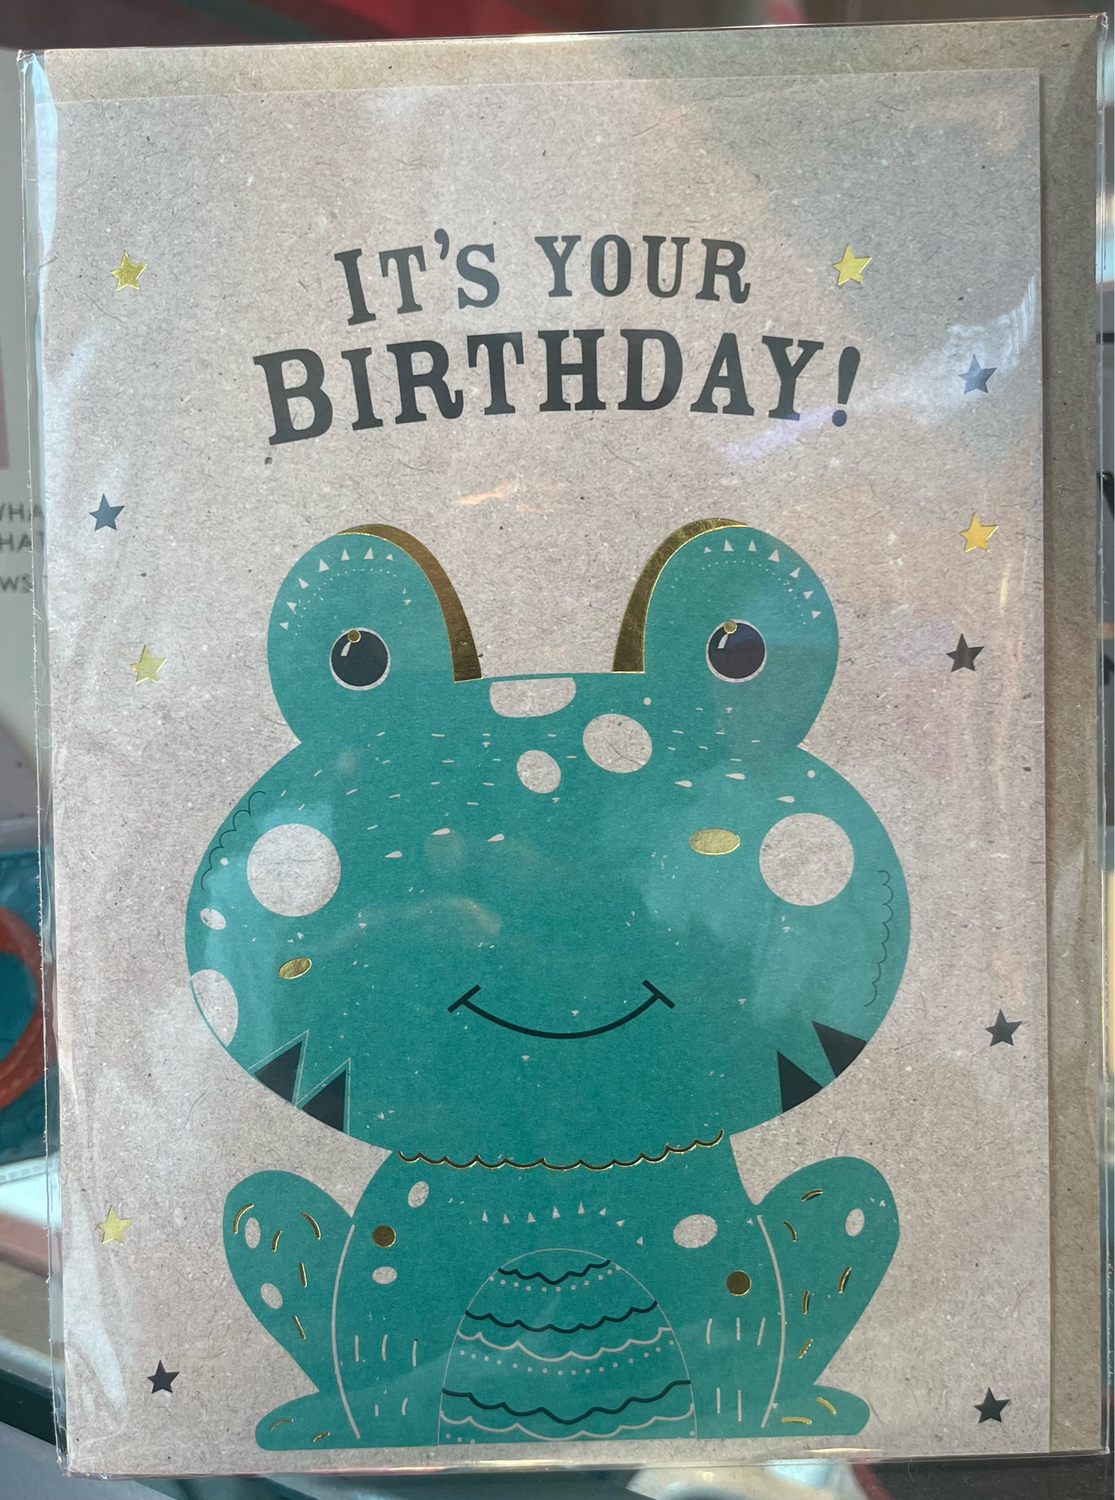 It's Your Birthday! Frog Birthday Card